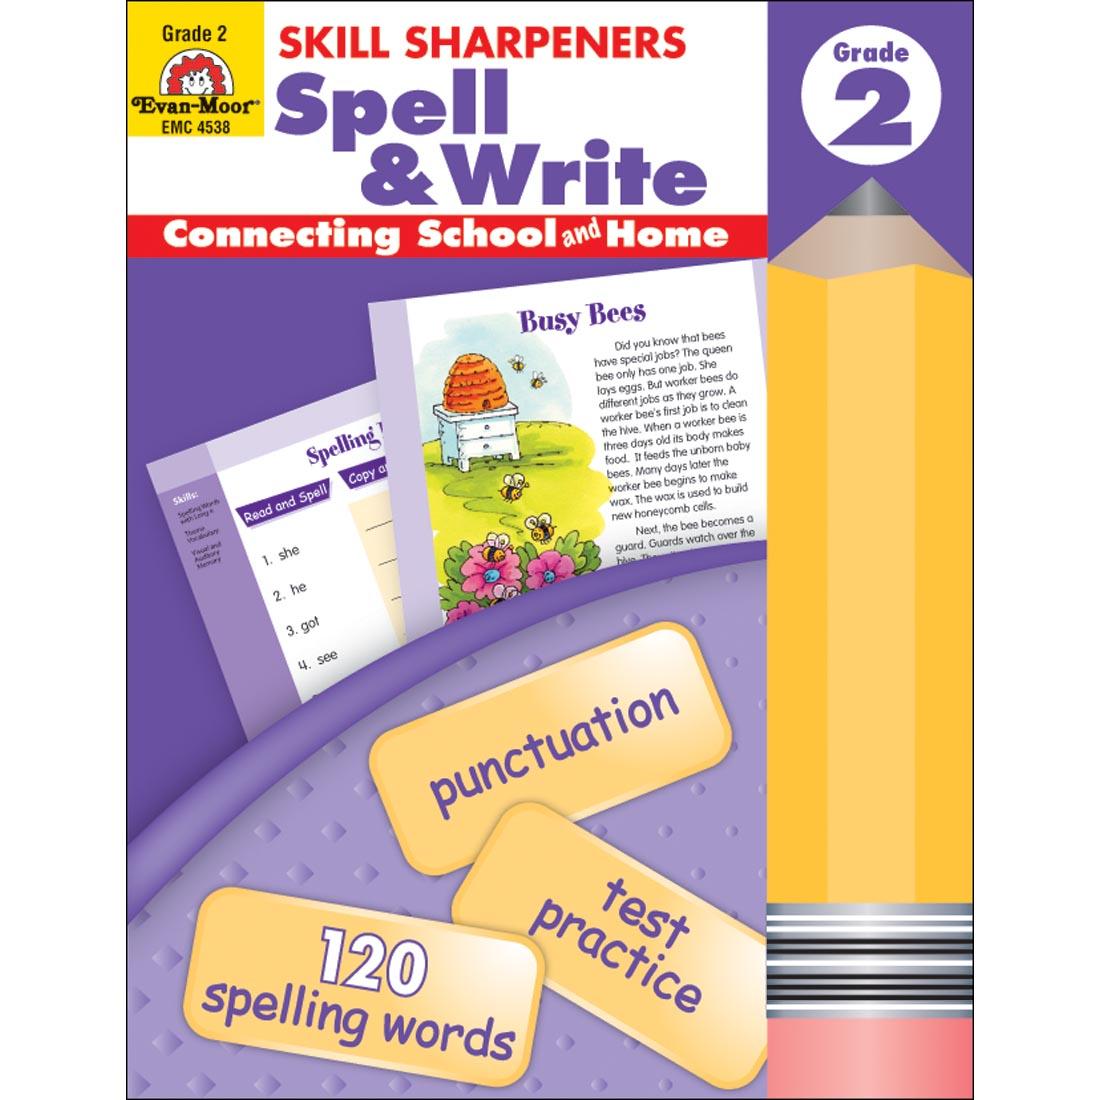 Skill Sharpeners Spell & Write by Evan-Moor Grade 2